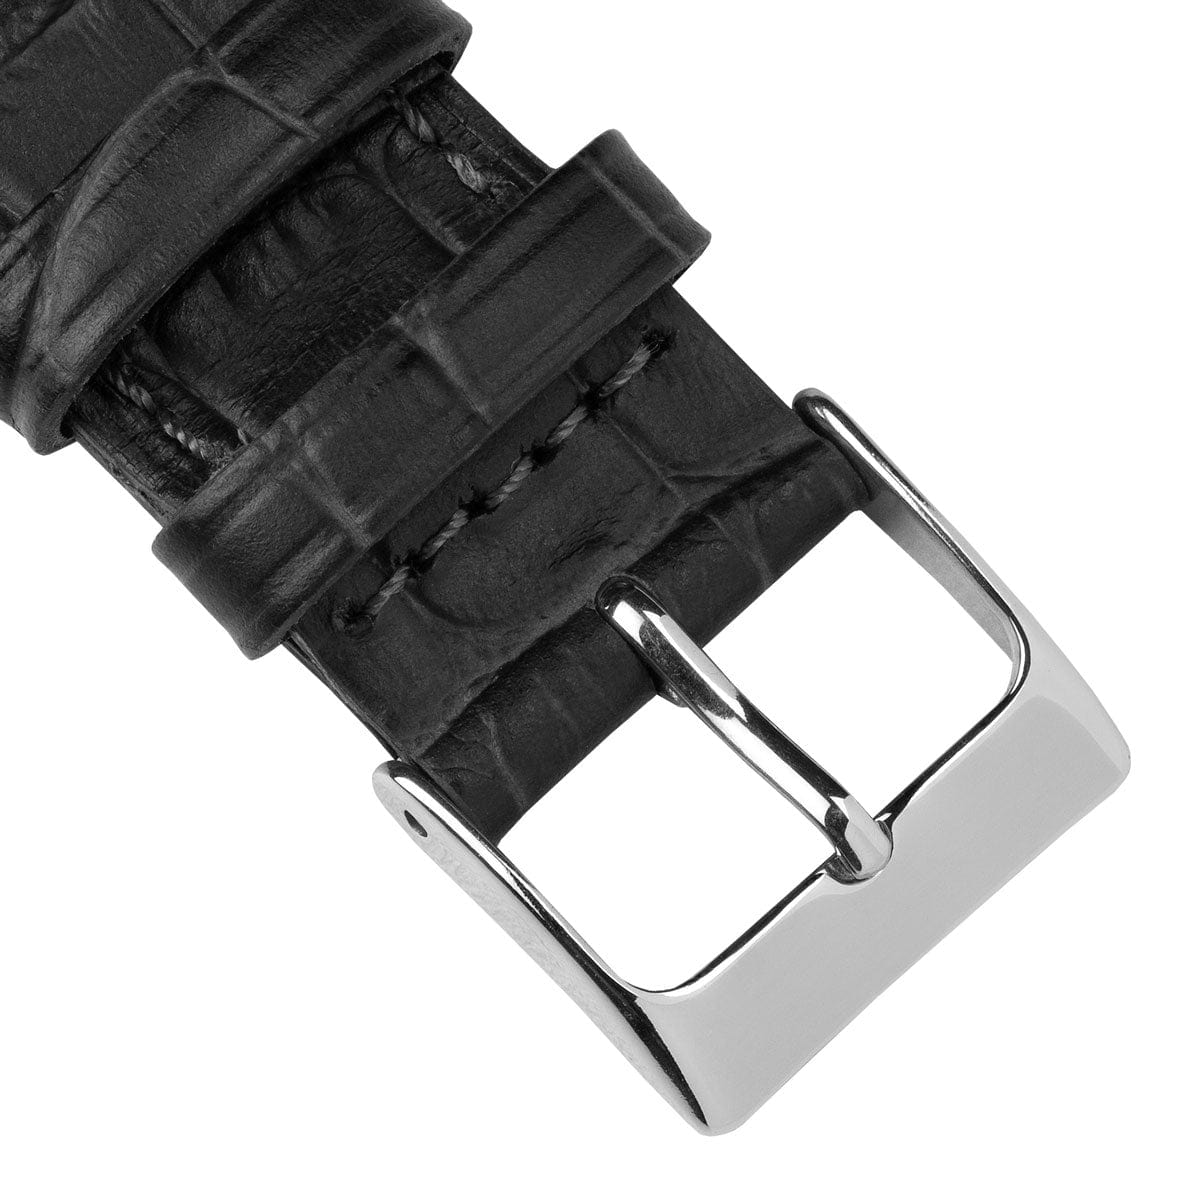 Textured Painswick Quick Release Genuine Leather Watch Strap - Grey Alligator